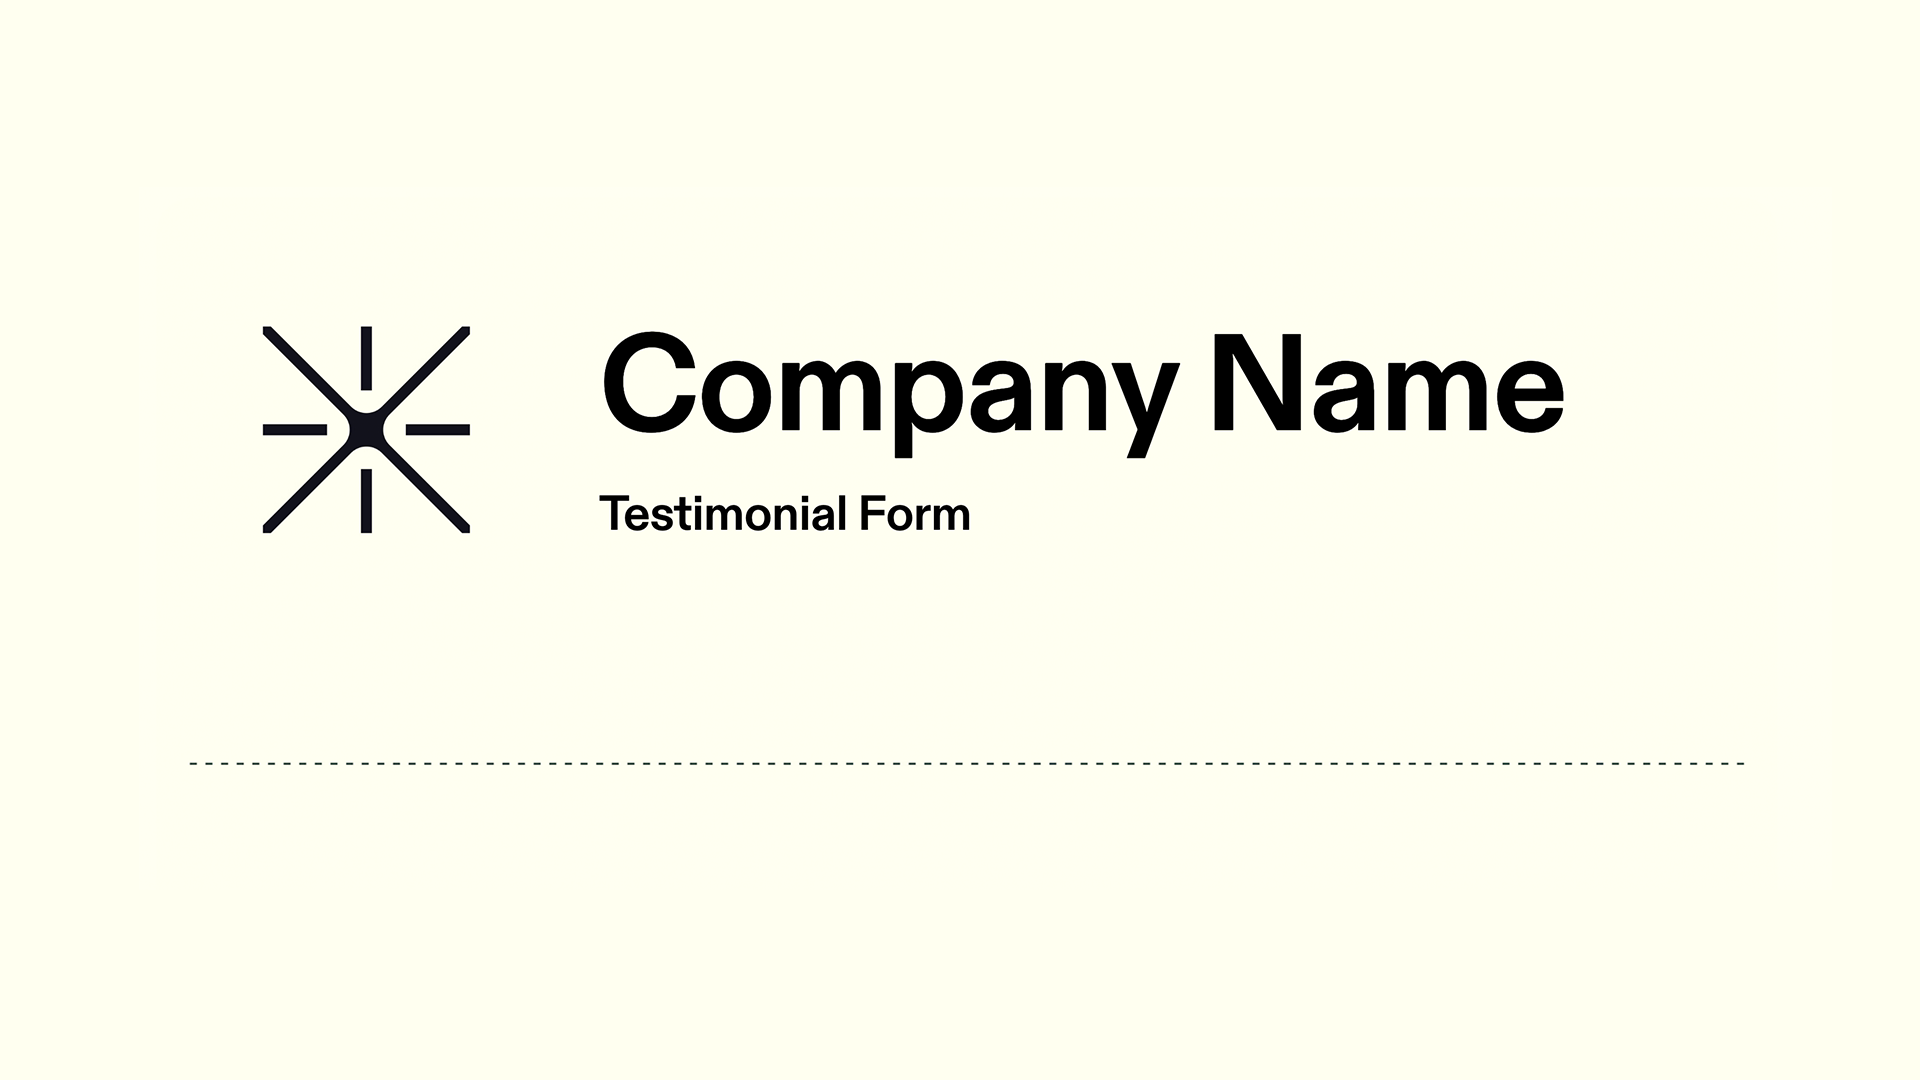 Testimonial - Company